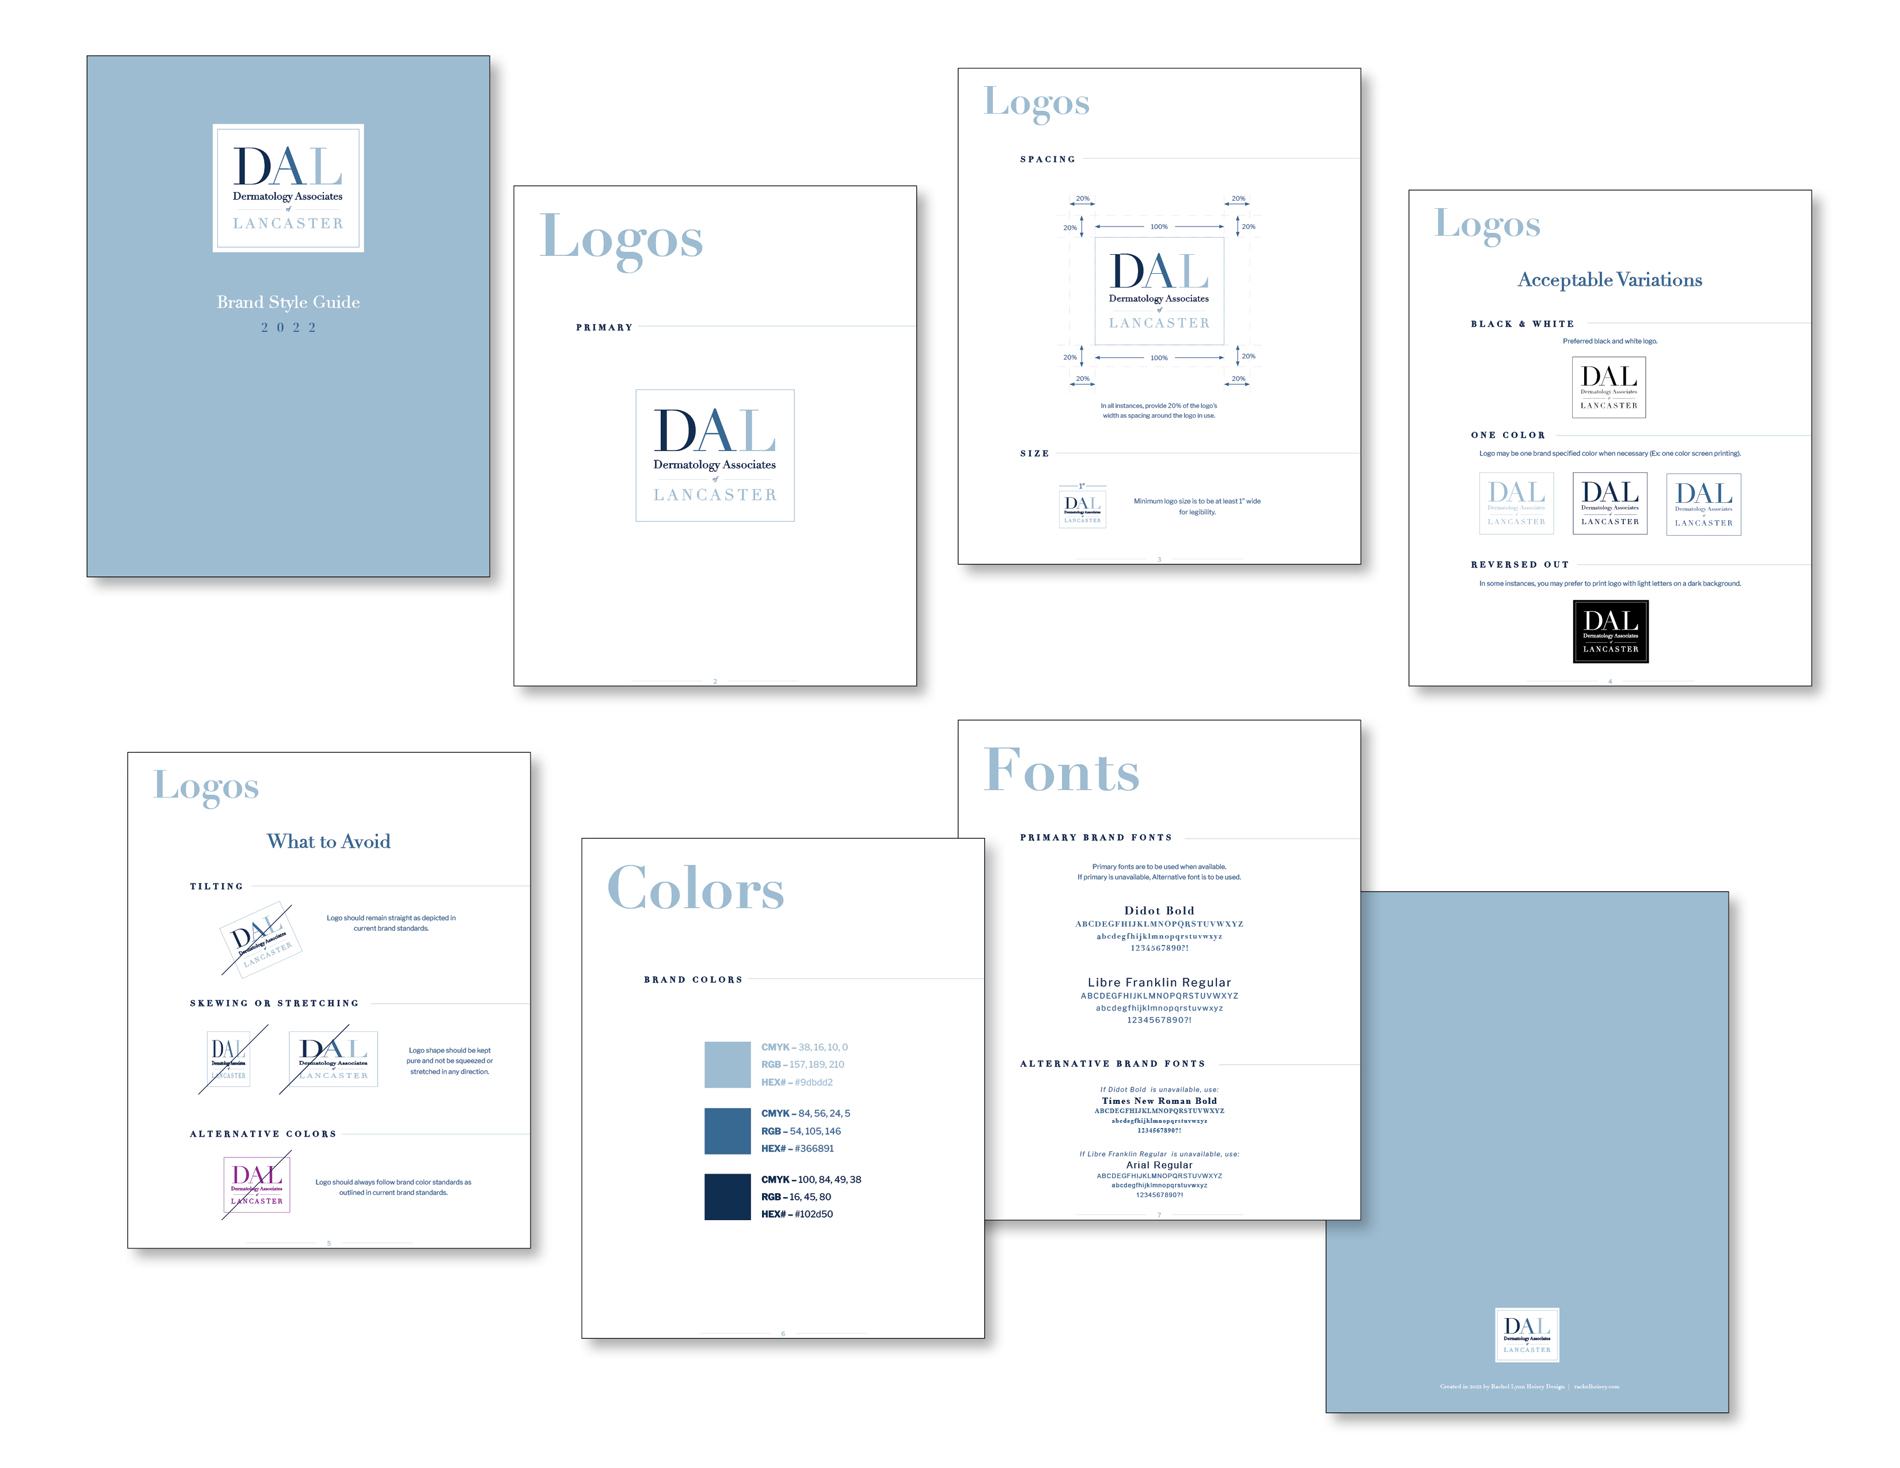 Dermatology Associates of Lancaster Brand Redesigned by Lancaster, PA Graphic Designer & Web Designer Rachel Lynn Heisey Style Guide